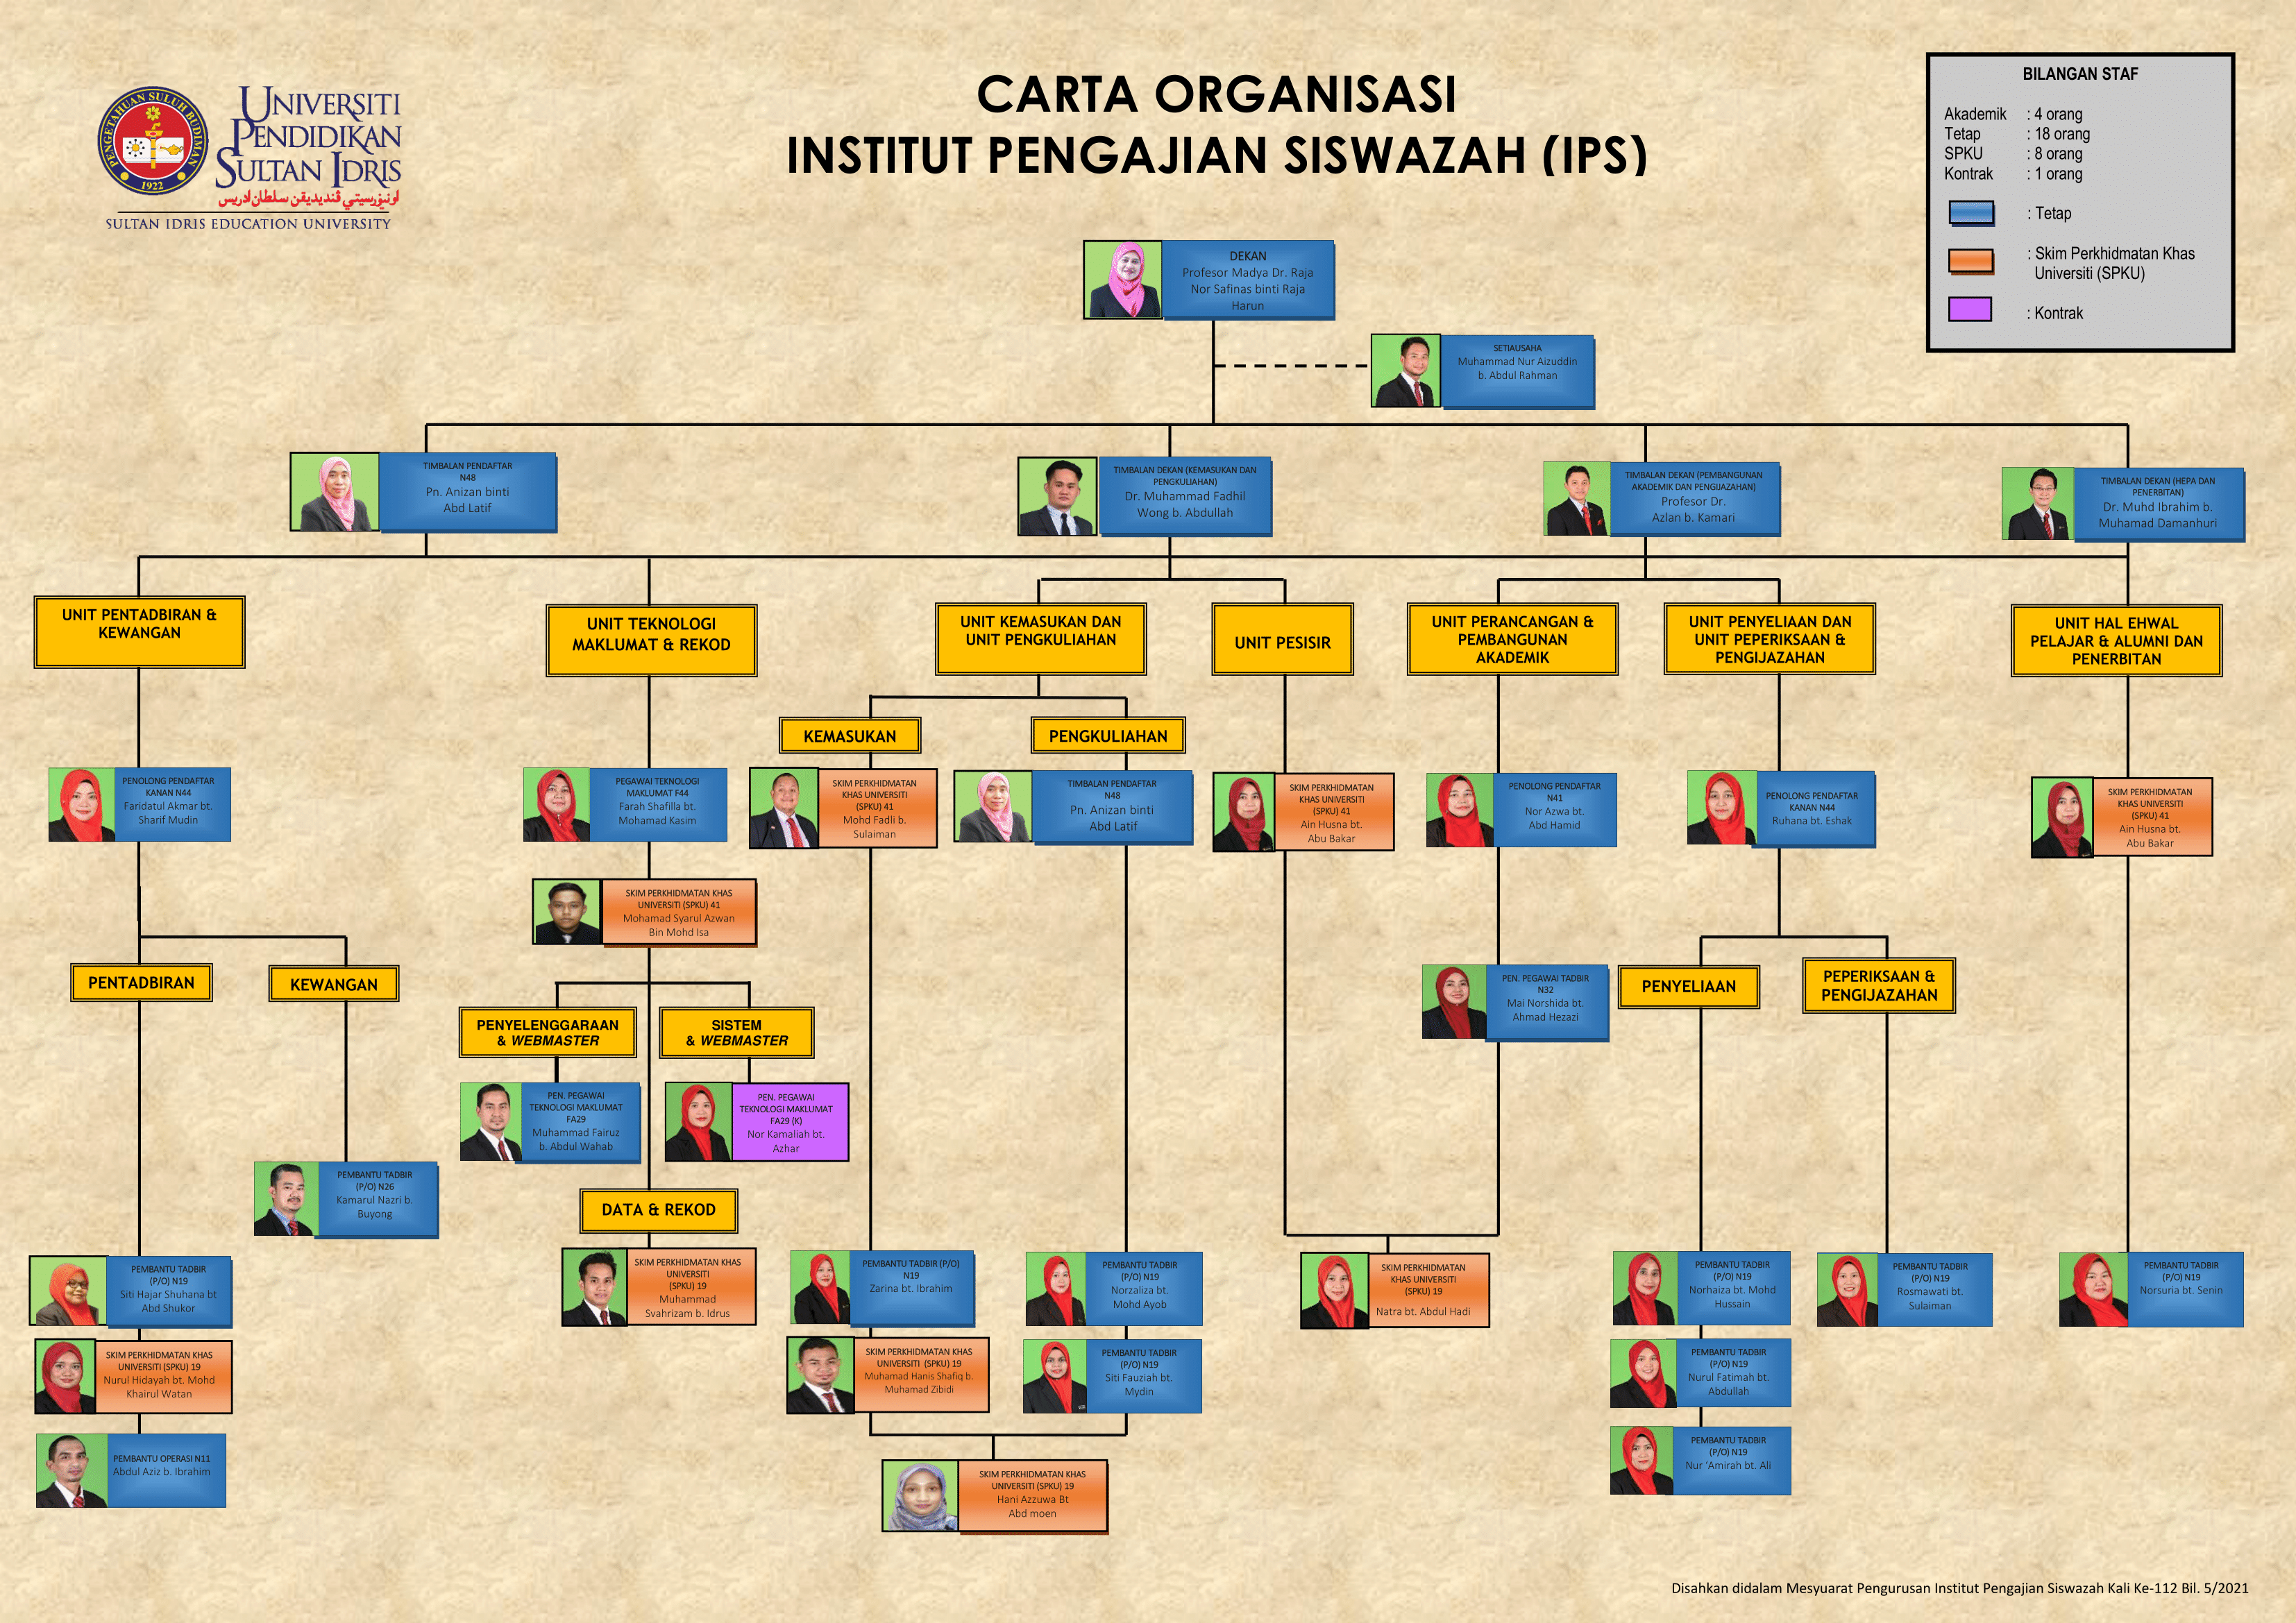 Carta organisasi in english